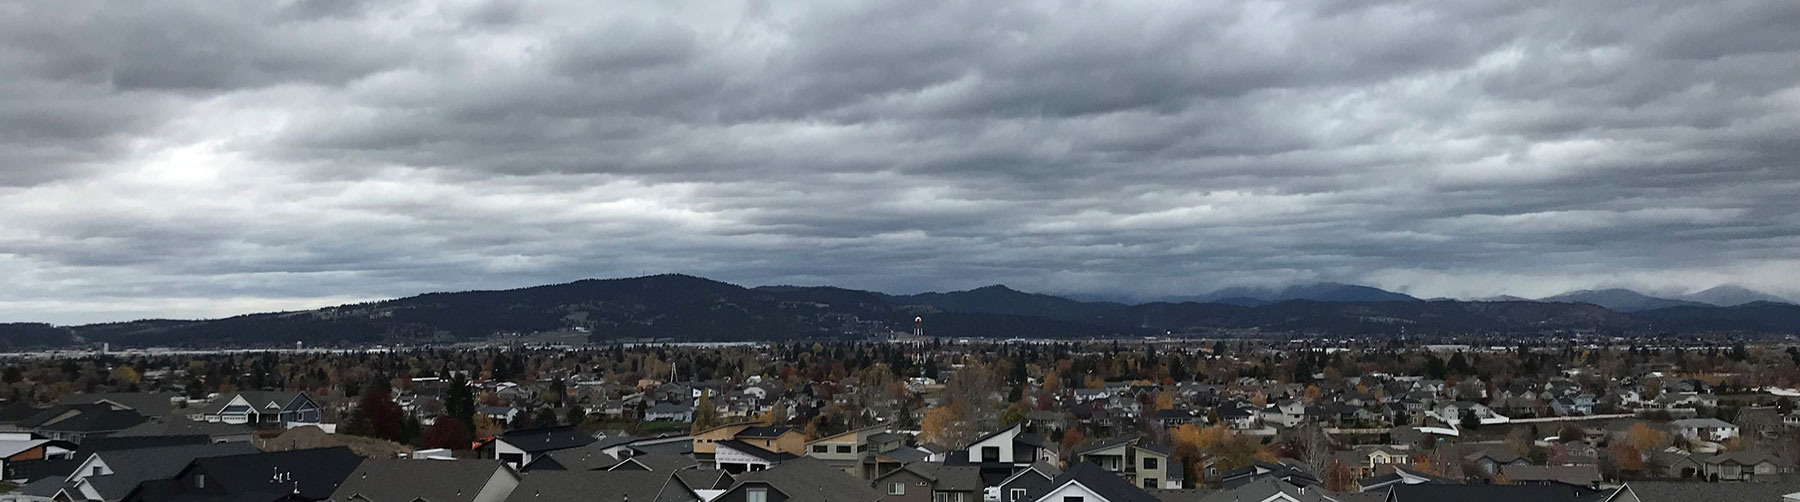 Aerial view of Spokane Valley